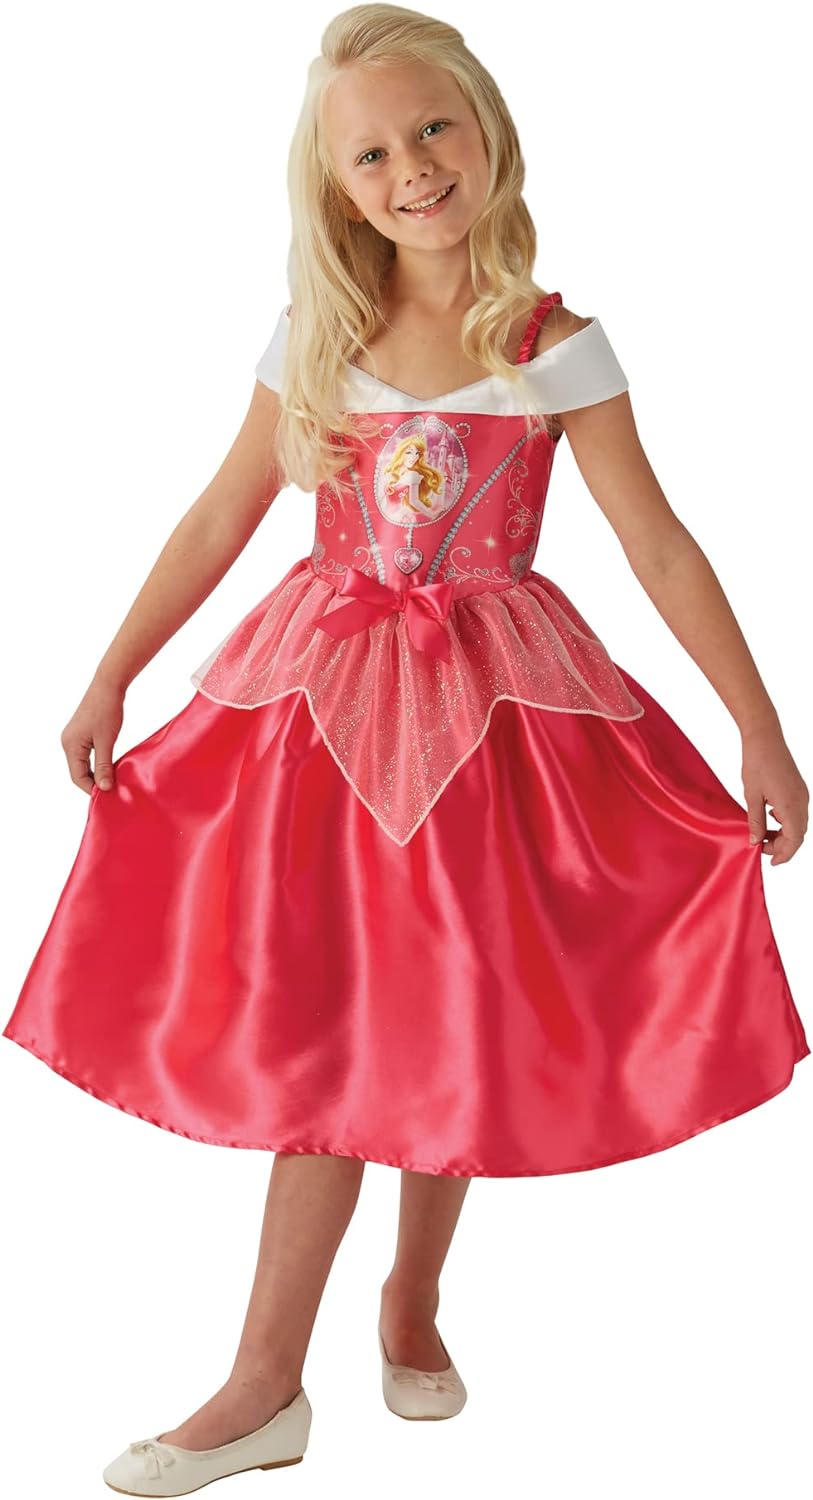 Rubies Official Girl's Disney Princess Fairy Tale Sleeping Beauty Costume Aurora - Medium, Red, 620538M